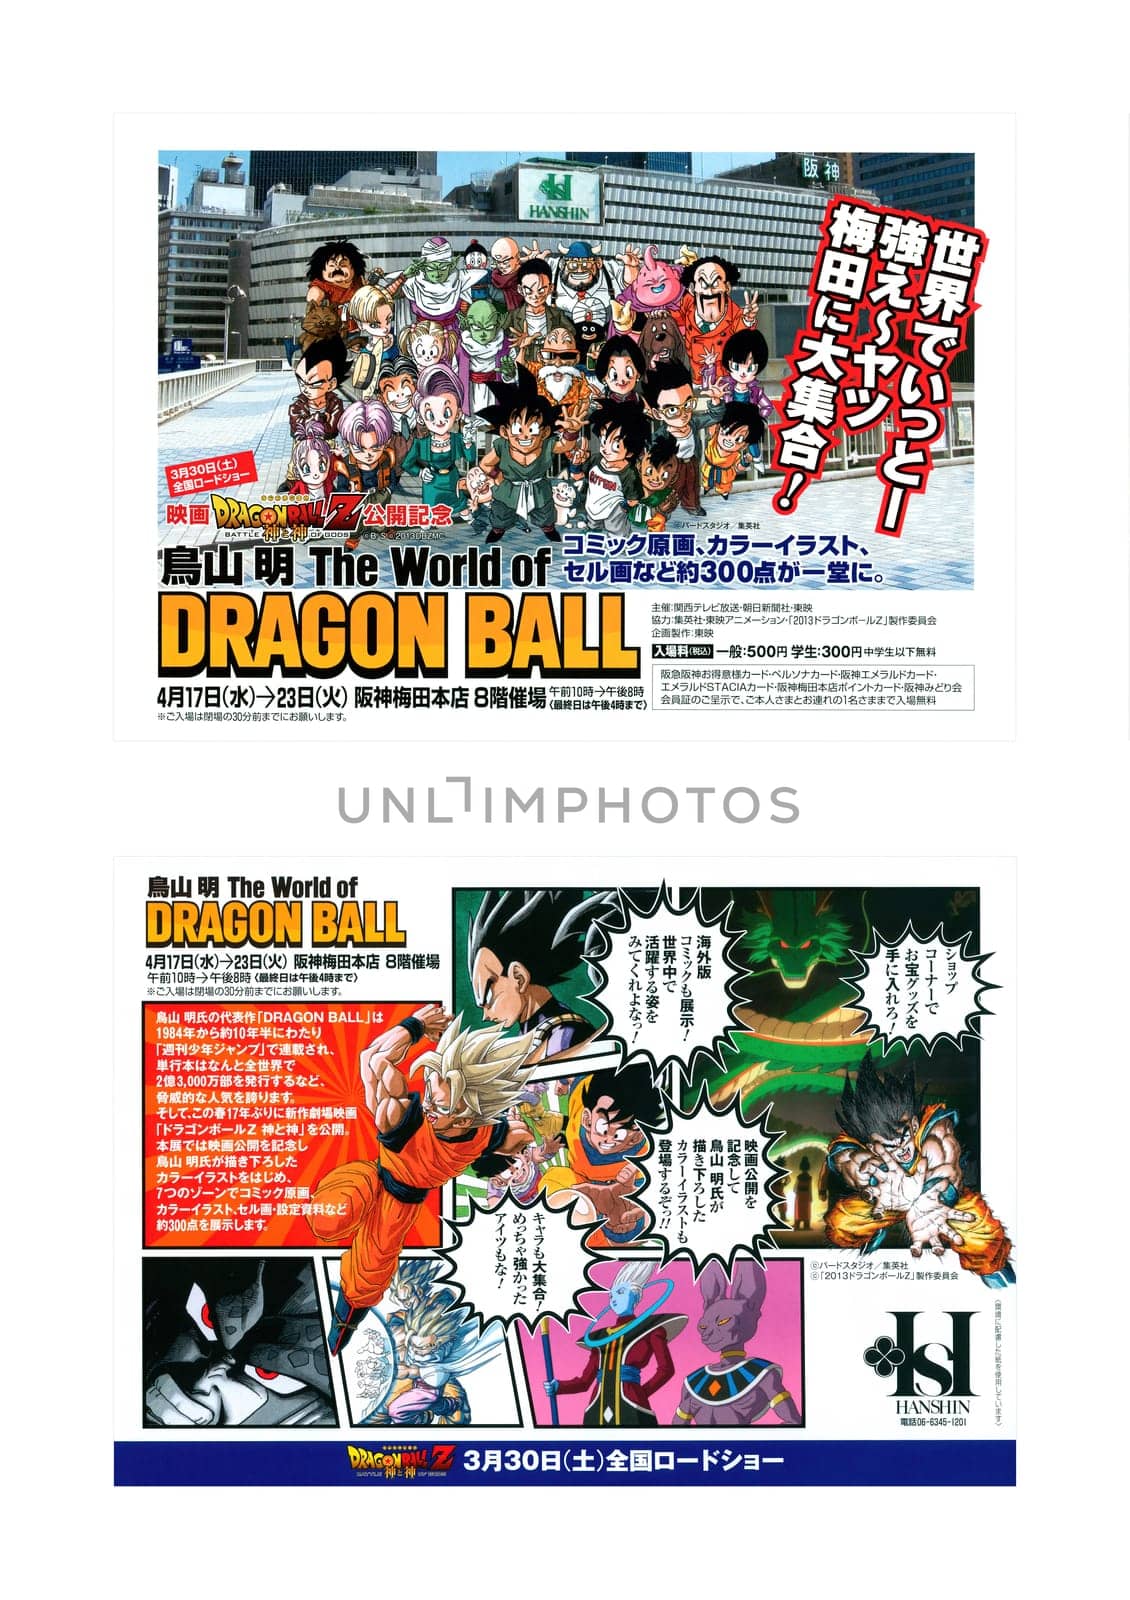 Leaflet of the exhibition "Akira Toriyama The World of DRAGONBALL" held in Osaka in 2013. by kuremo